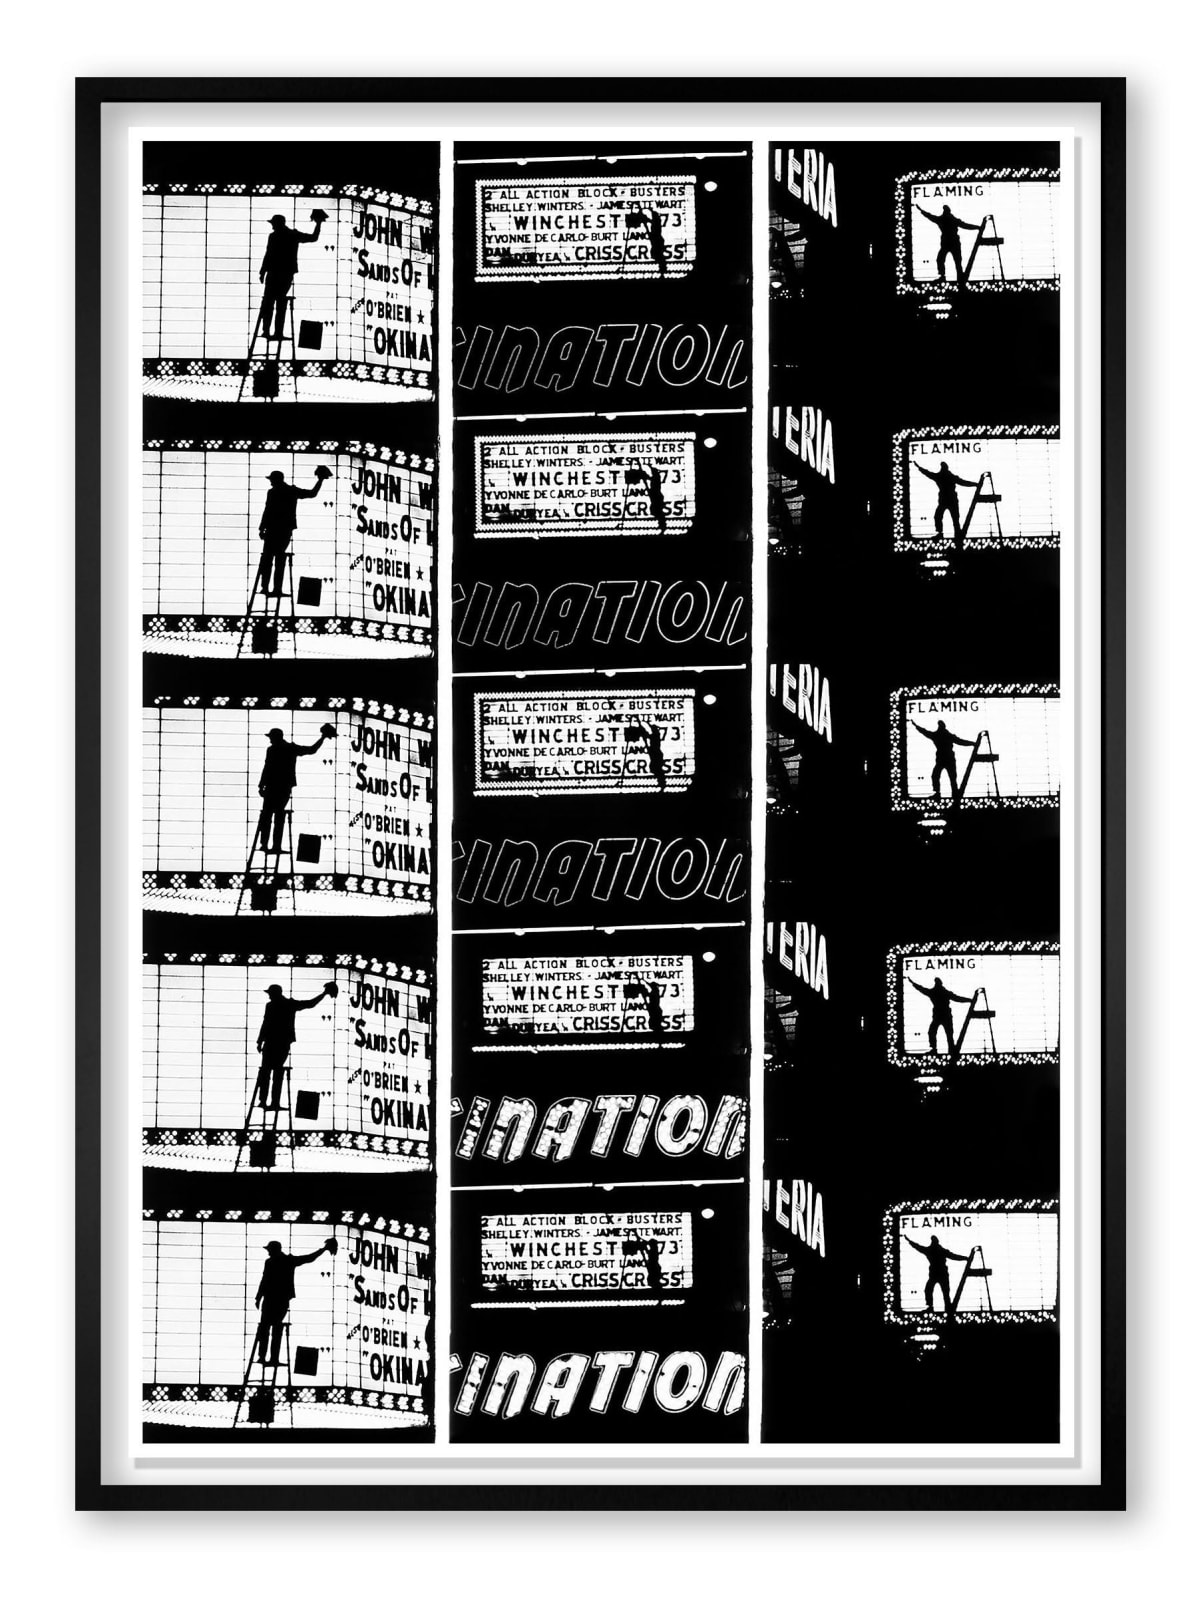 William Klein, Film Strips from Broadway by Light #2, 1958